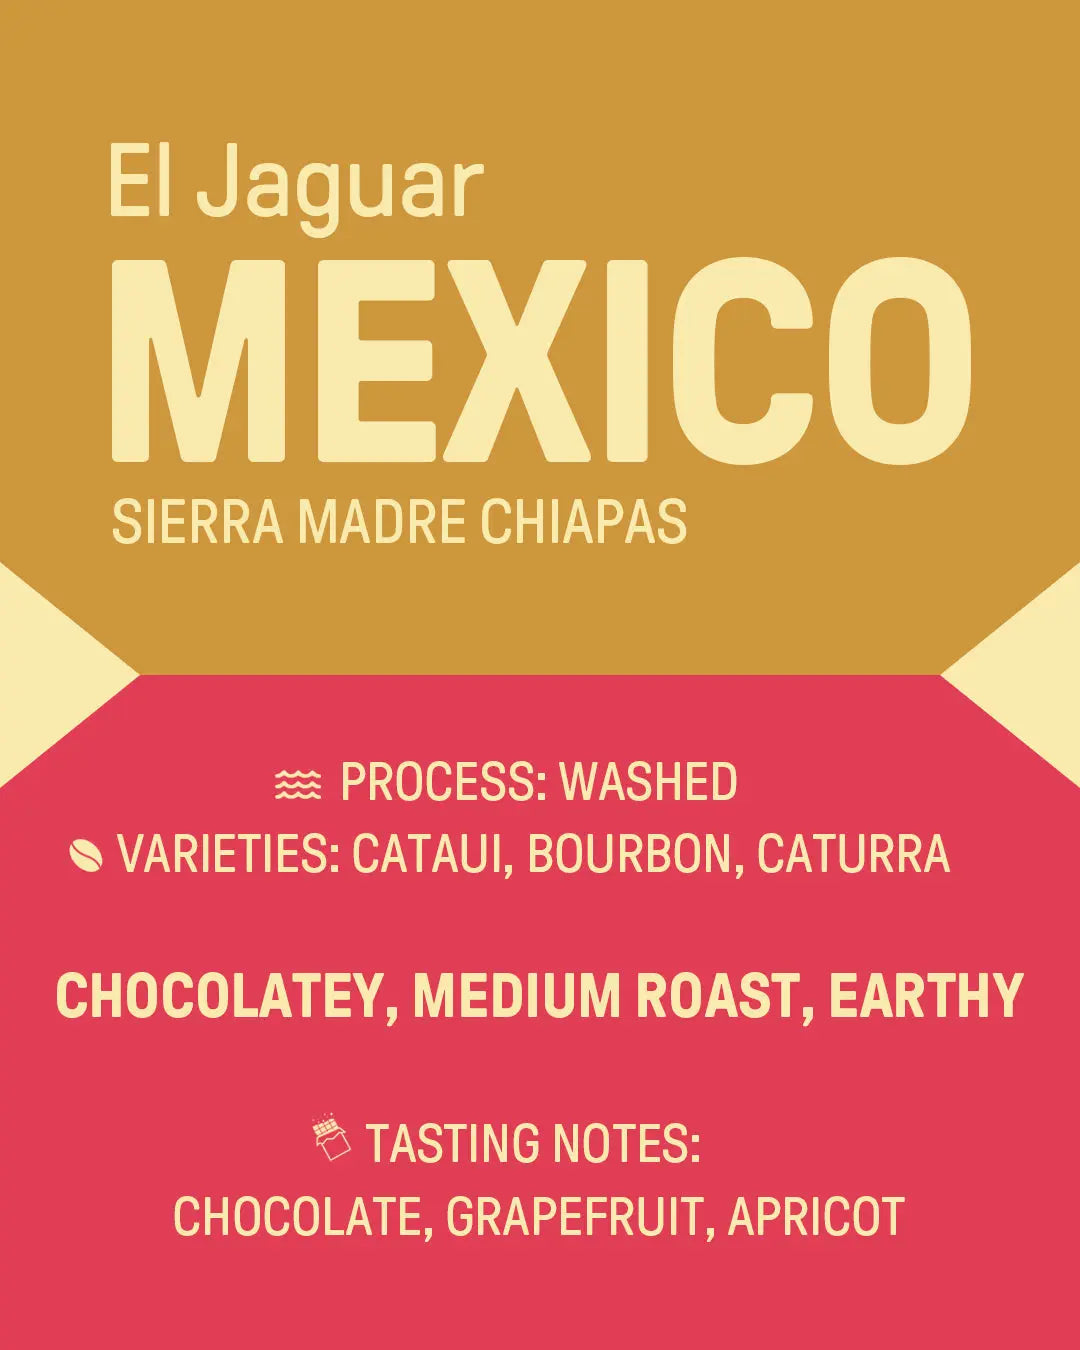 Mexico Chiapas "El Jaguar" James Coffee Co.